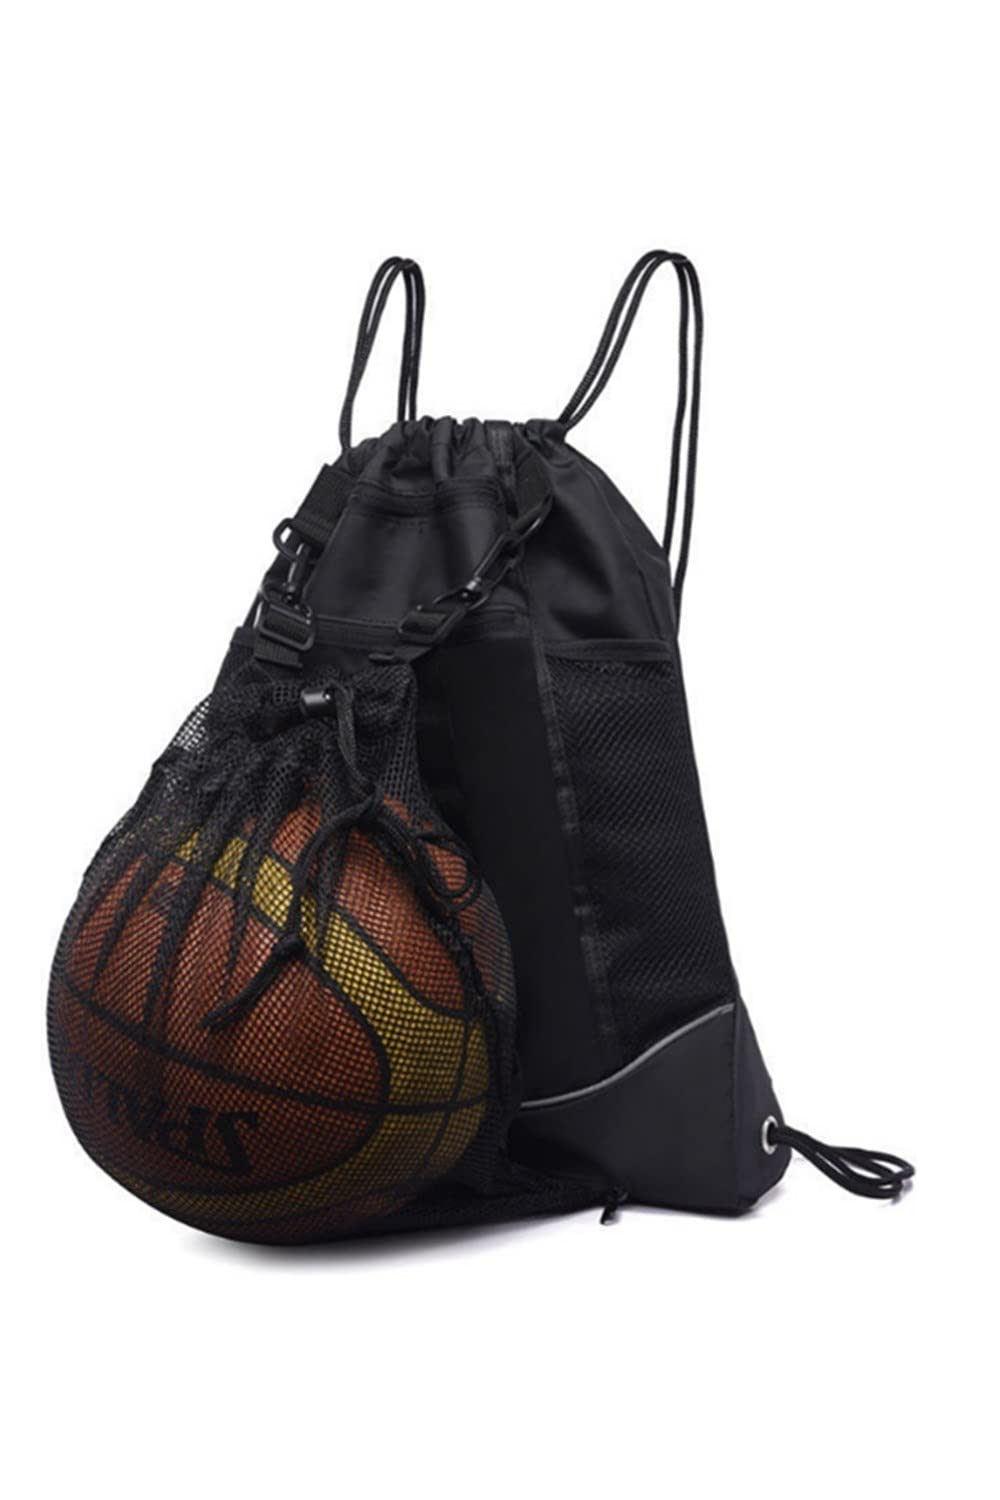 YFFSFDC バスケットボールバッグ バスケ リュック サッカーボールバッグ ボールケース 軽量 便利 多機能 大容量 スポーツバッグ (ブラ..